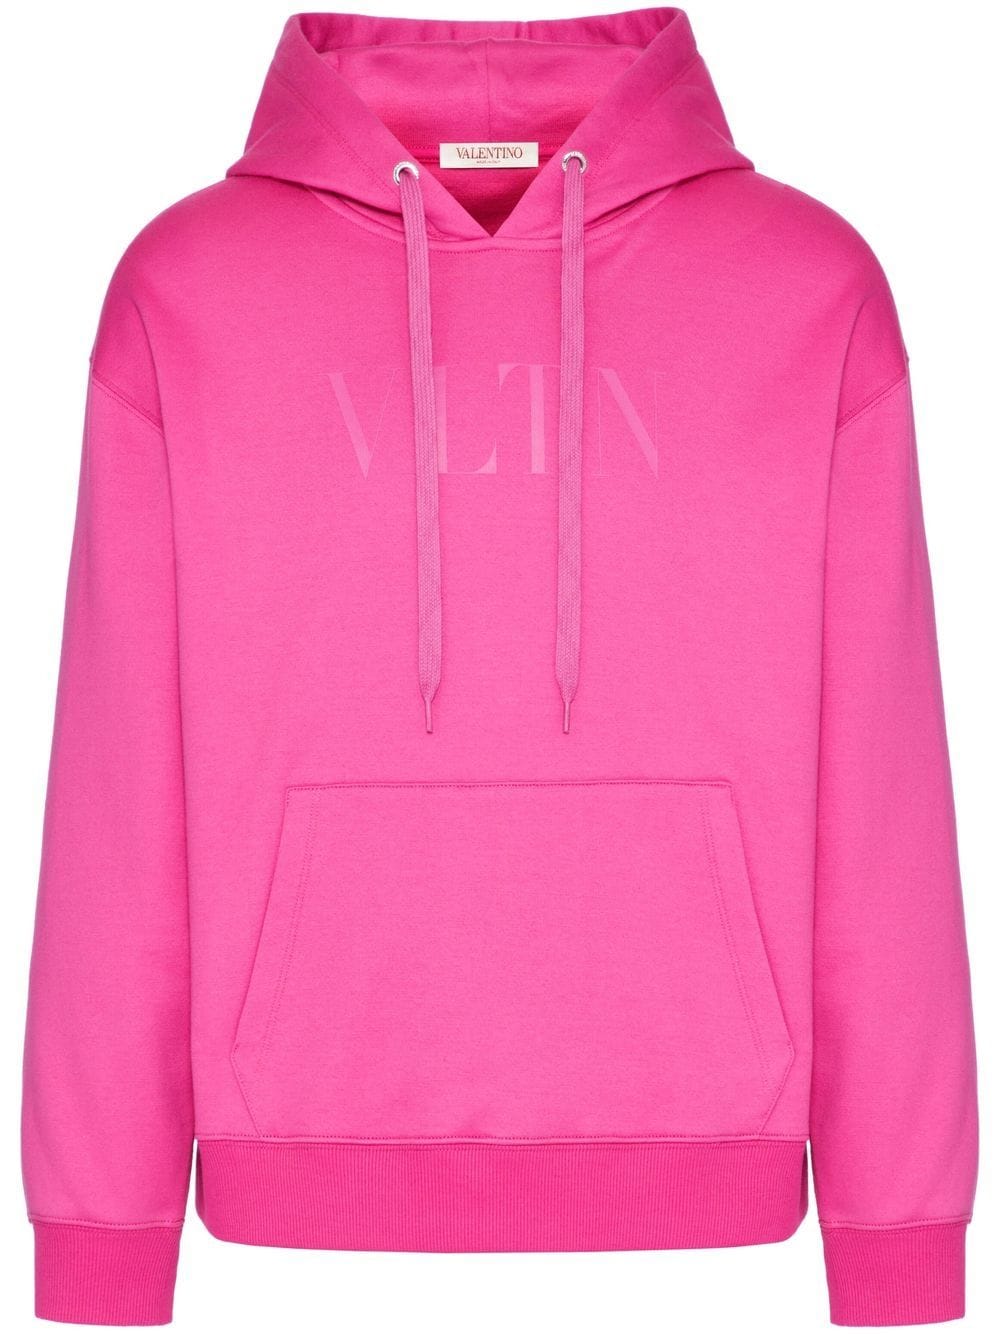 Valentino Cotton Hooded Sweatshirt With Vltn Print In Pink